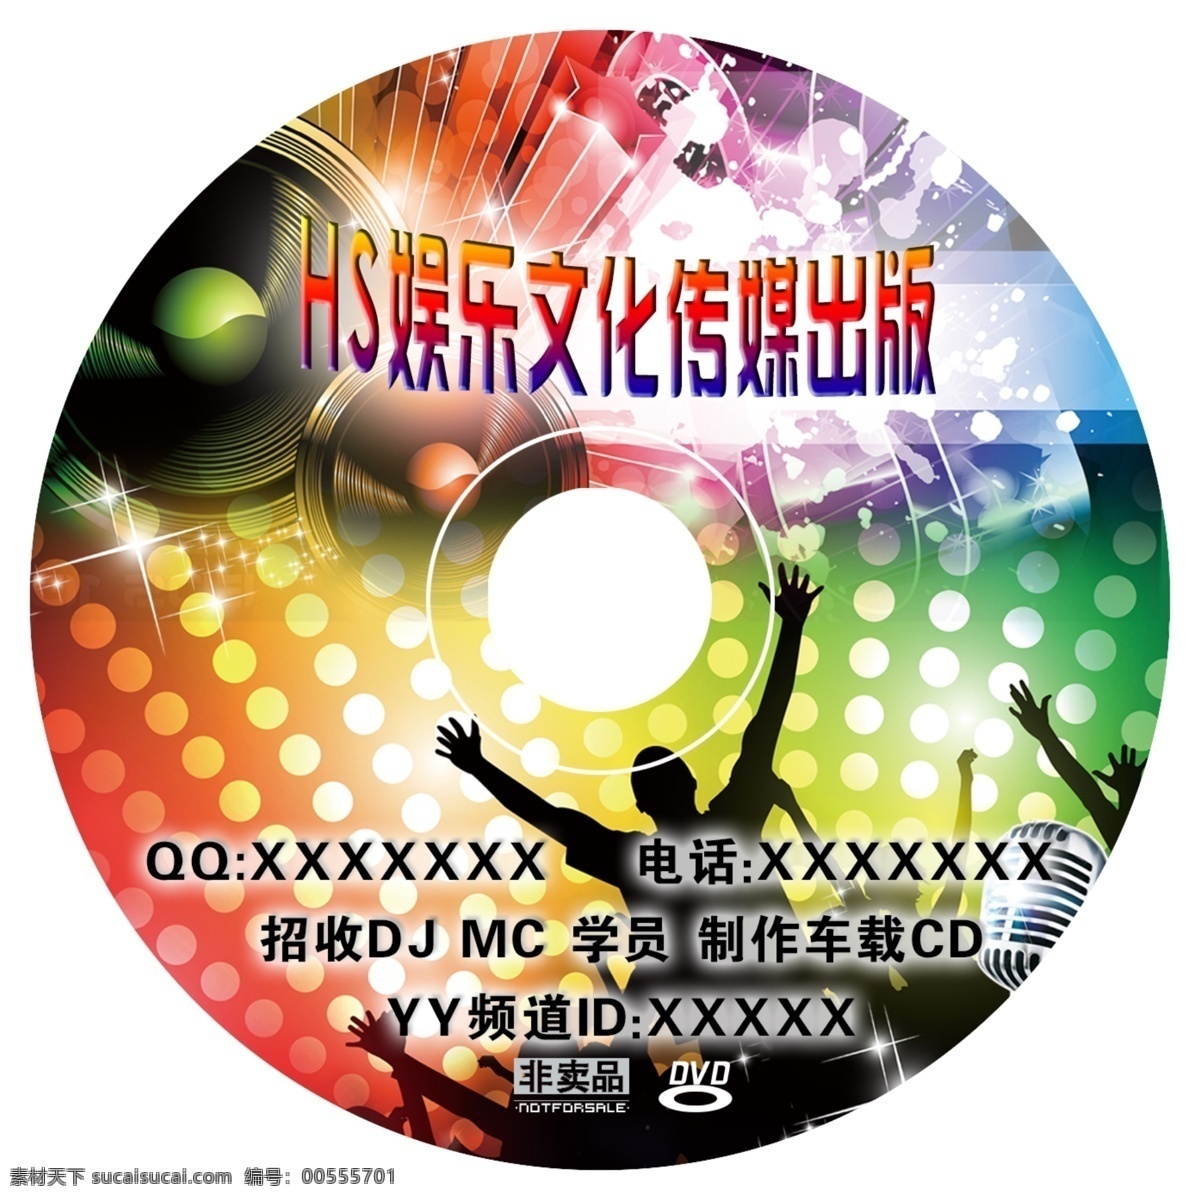 hs 娱乐 文化 传媒 出版 音乐 cd 专辑 psd源文件